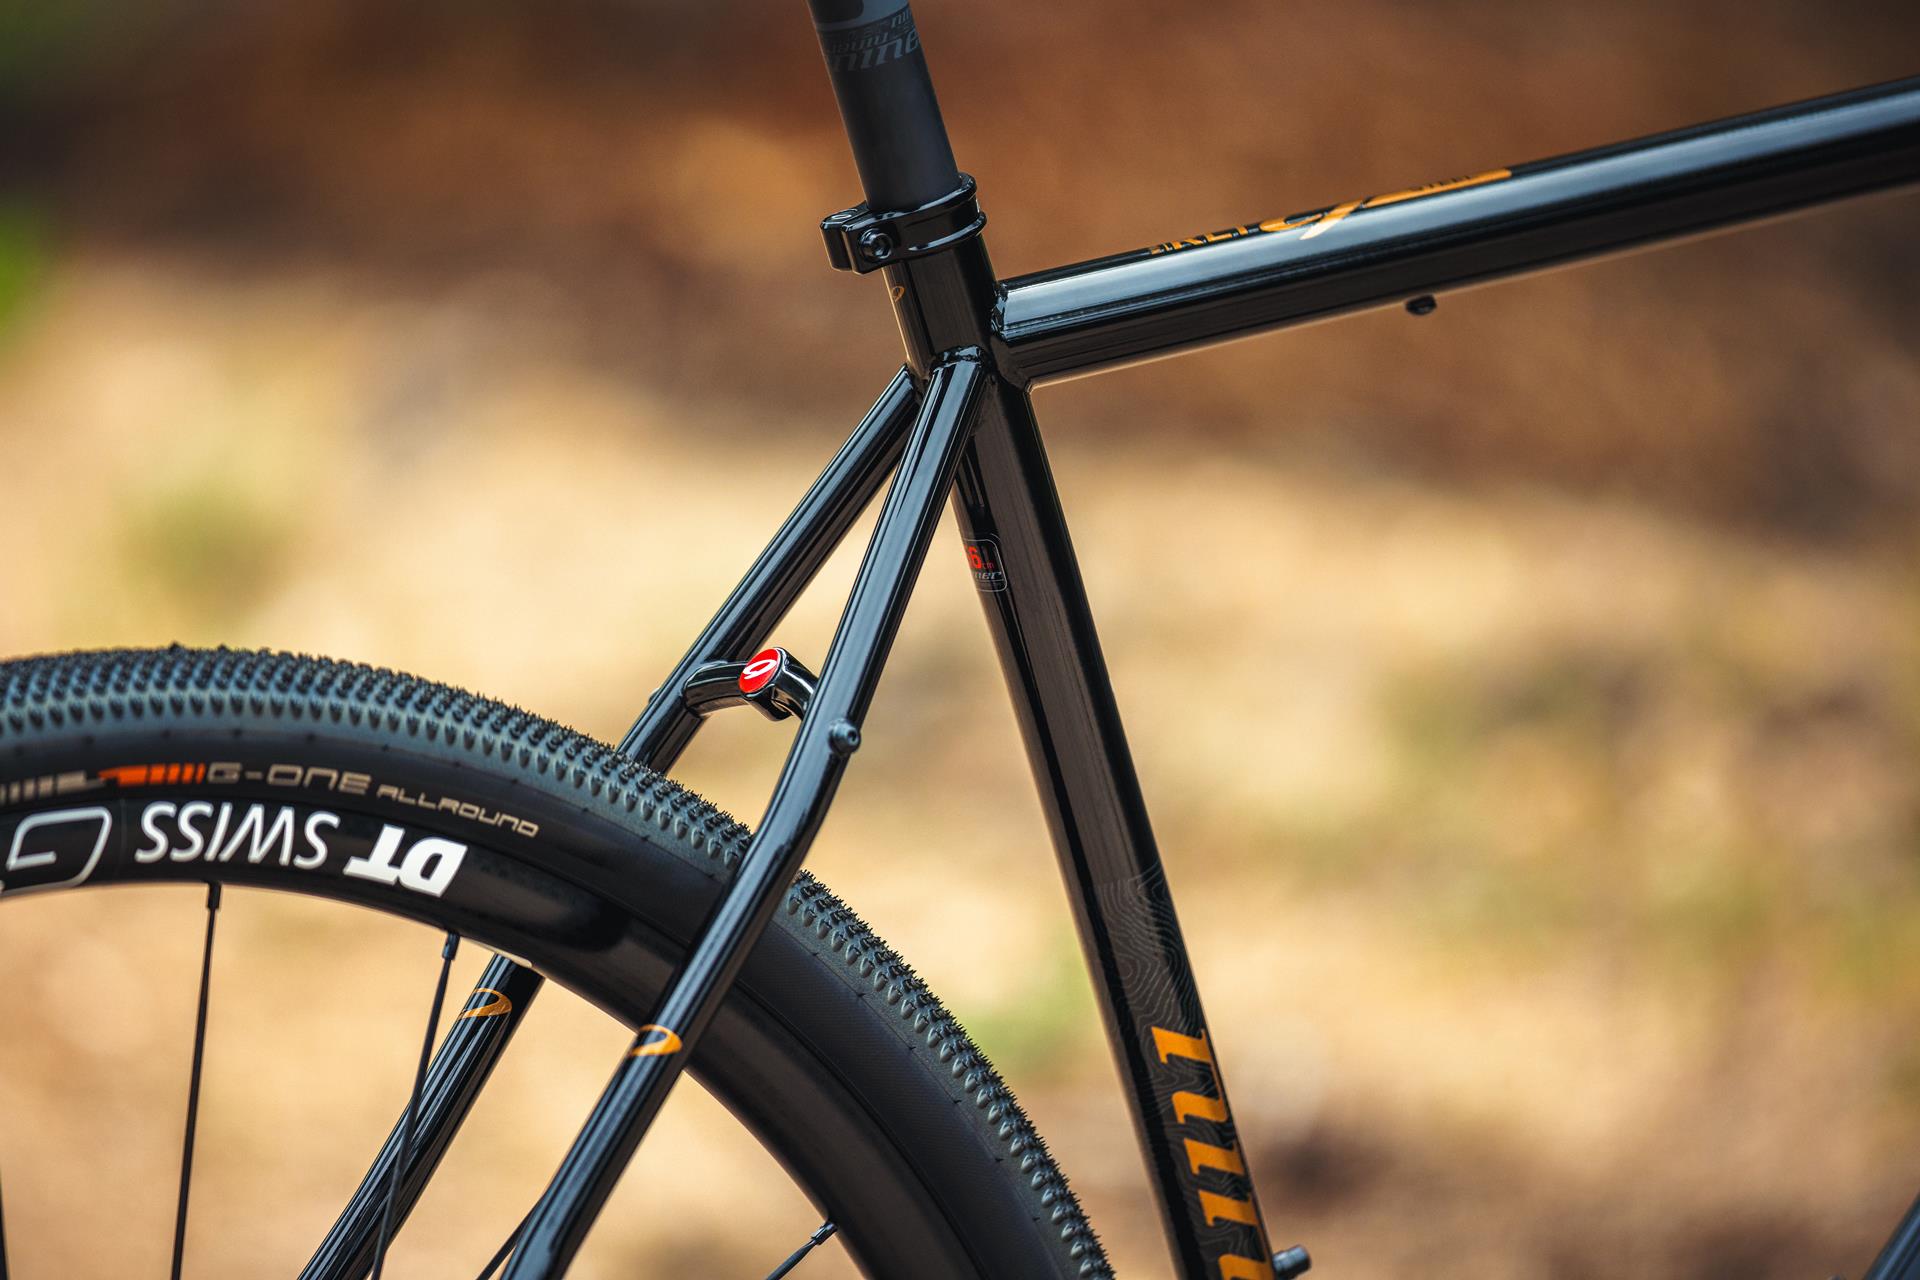 Niner RLT 2-star dviratis, juoda bronza, 53